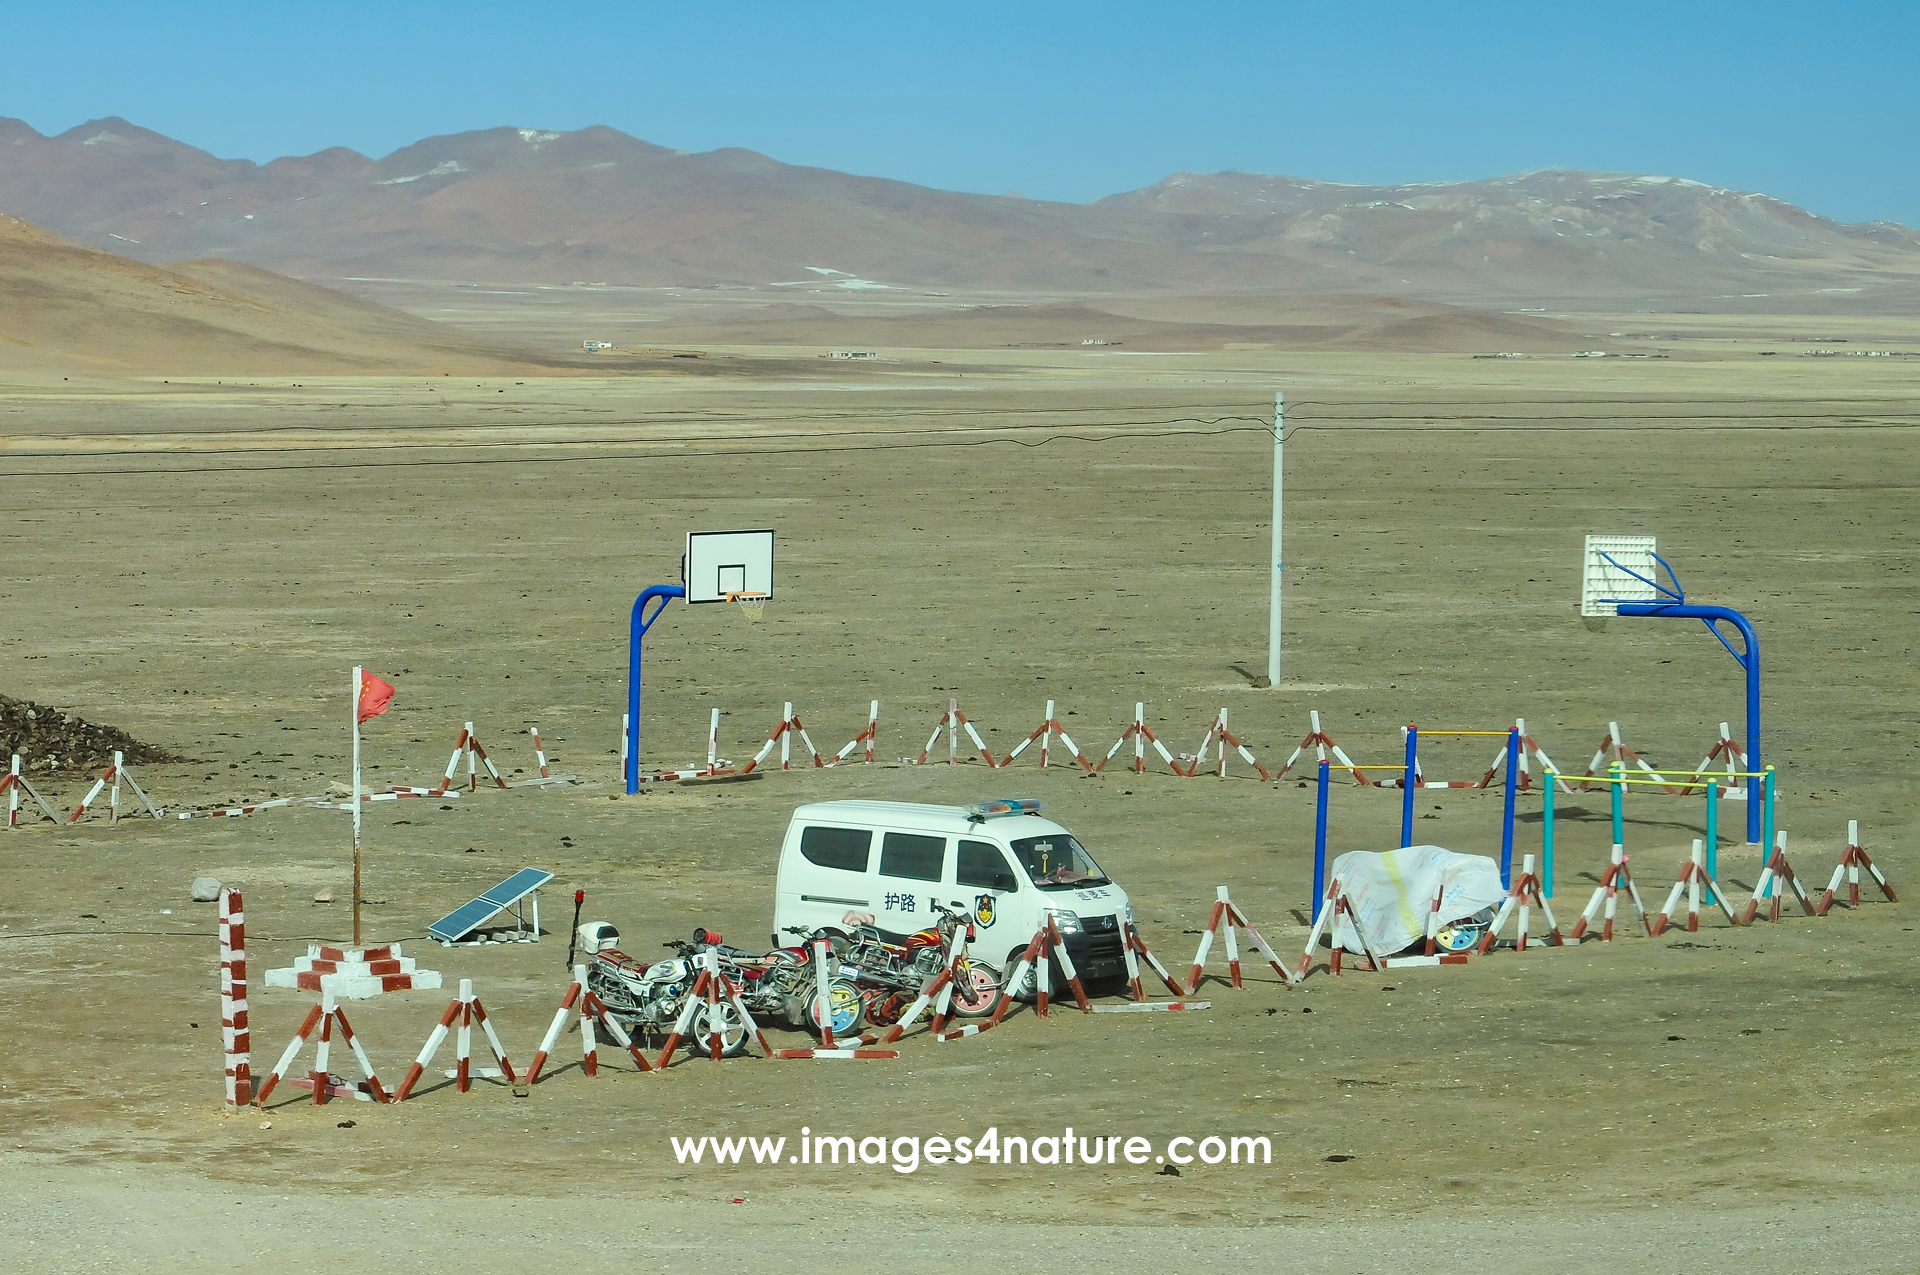 Basketball court in a remote Tibetan highlands landscape